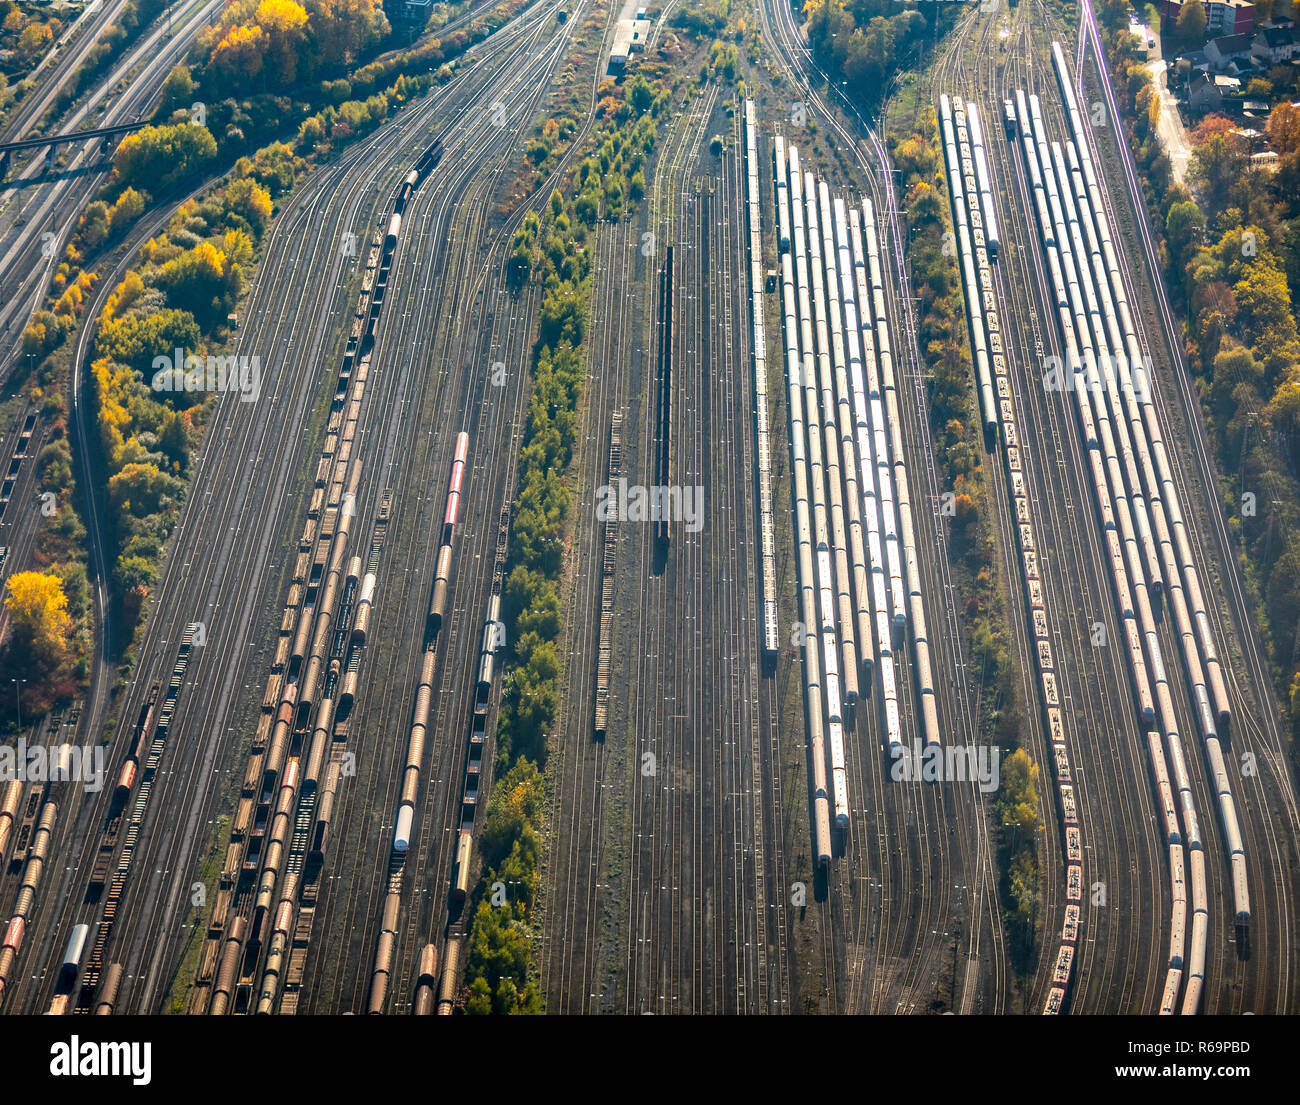 Aerial view, Hamm freight station, wagon sidings, marshalling yard, Hamm, Ruhr area, North Rhine-Westphalia, Germany Stock Photo